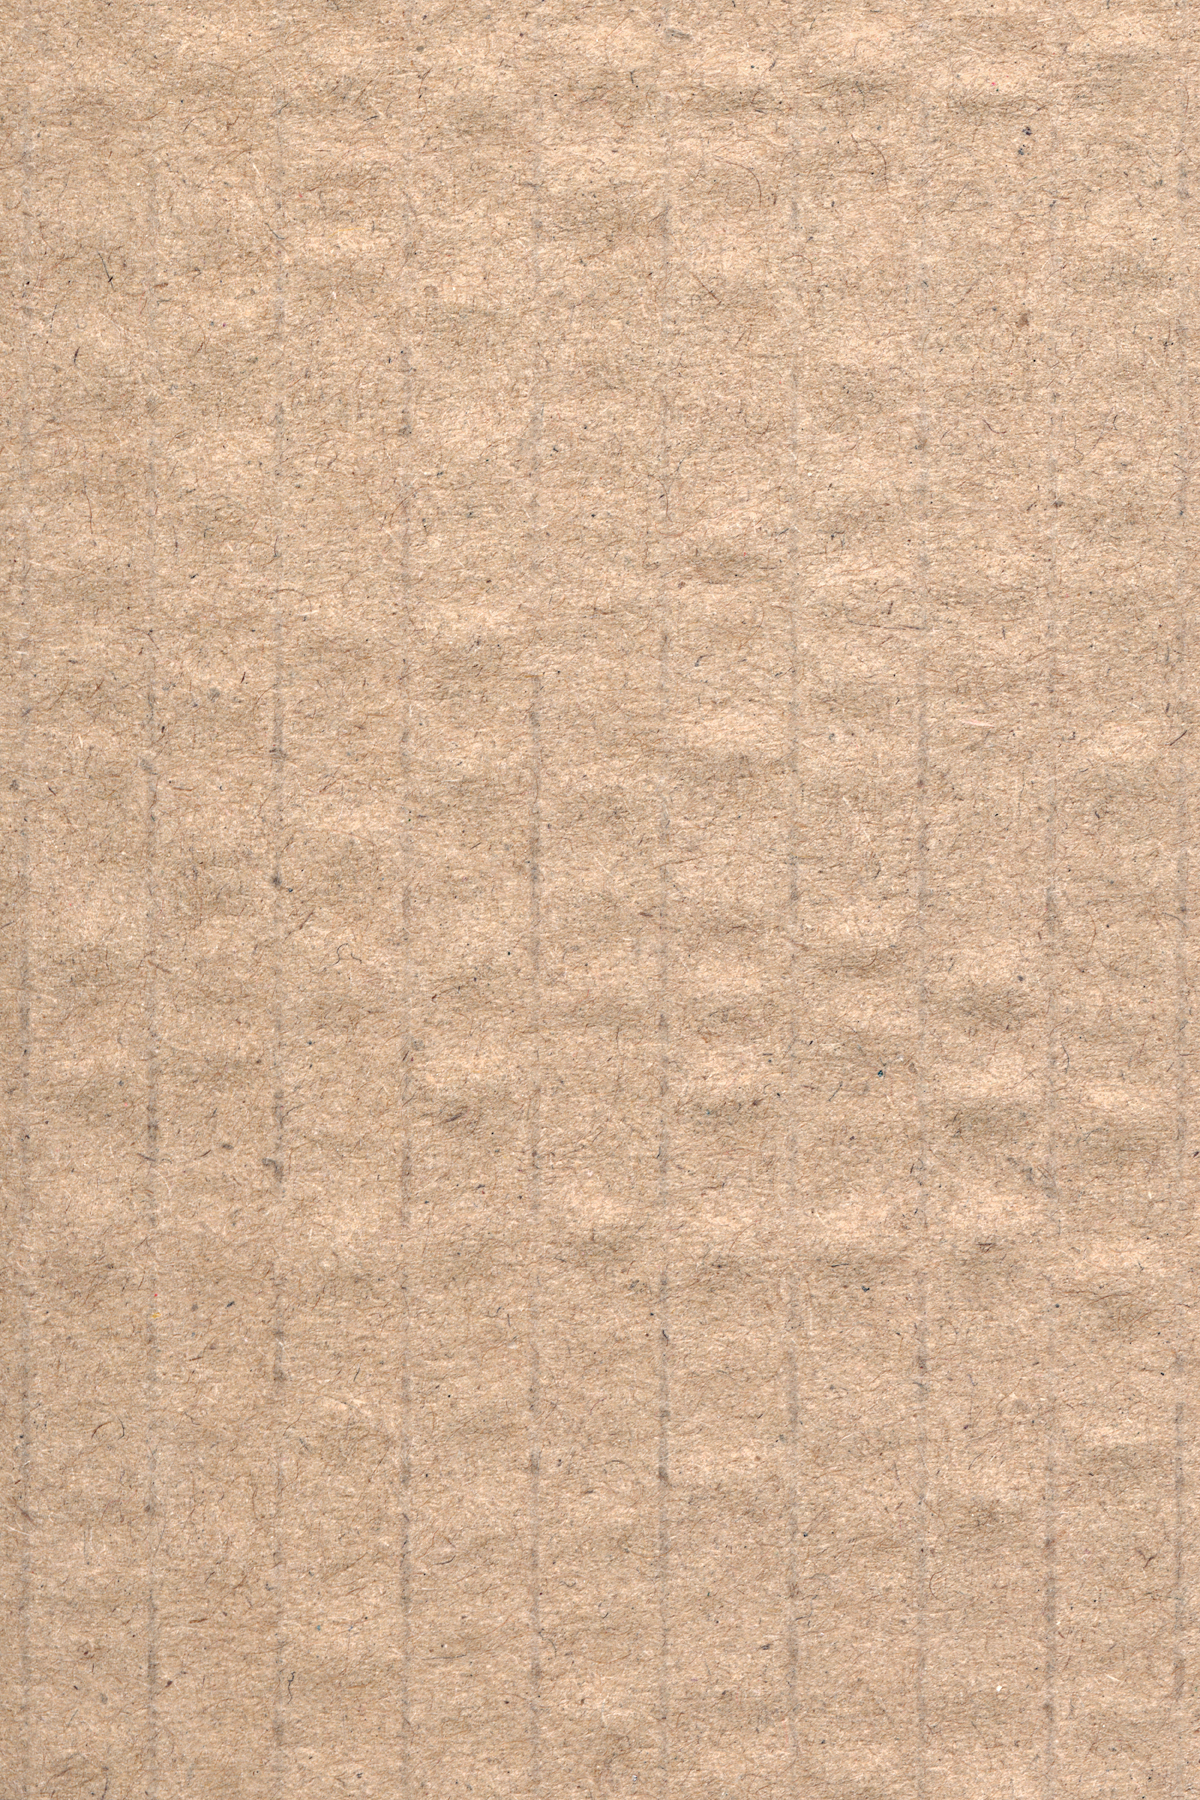 Cardboard Texture - Bumps & Lines, Backdrop, Scrapbooking, Picture, Plain, HQ Photo